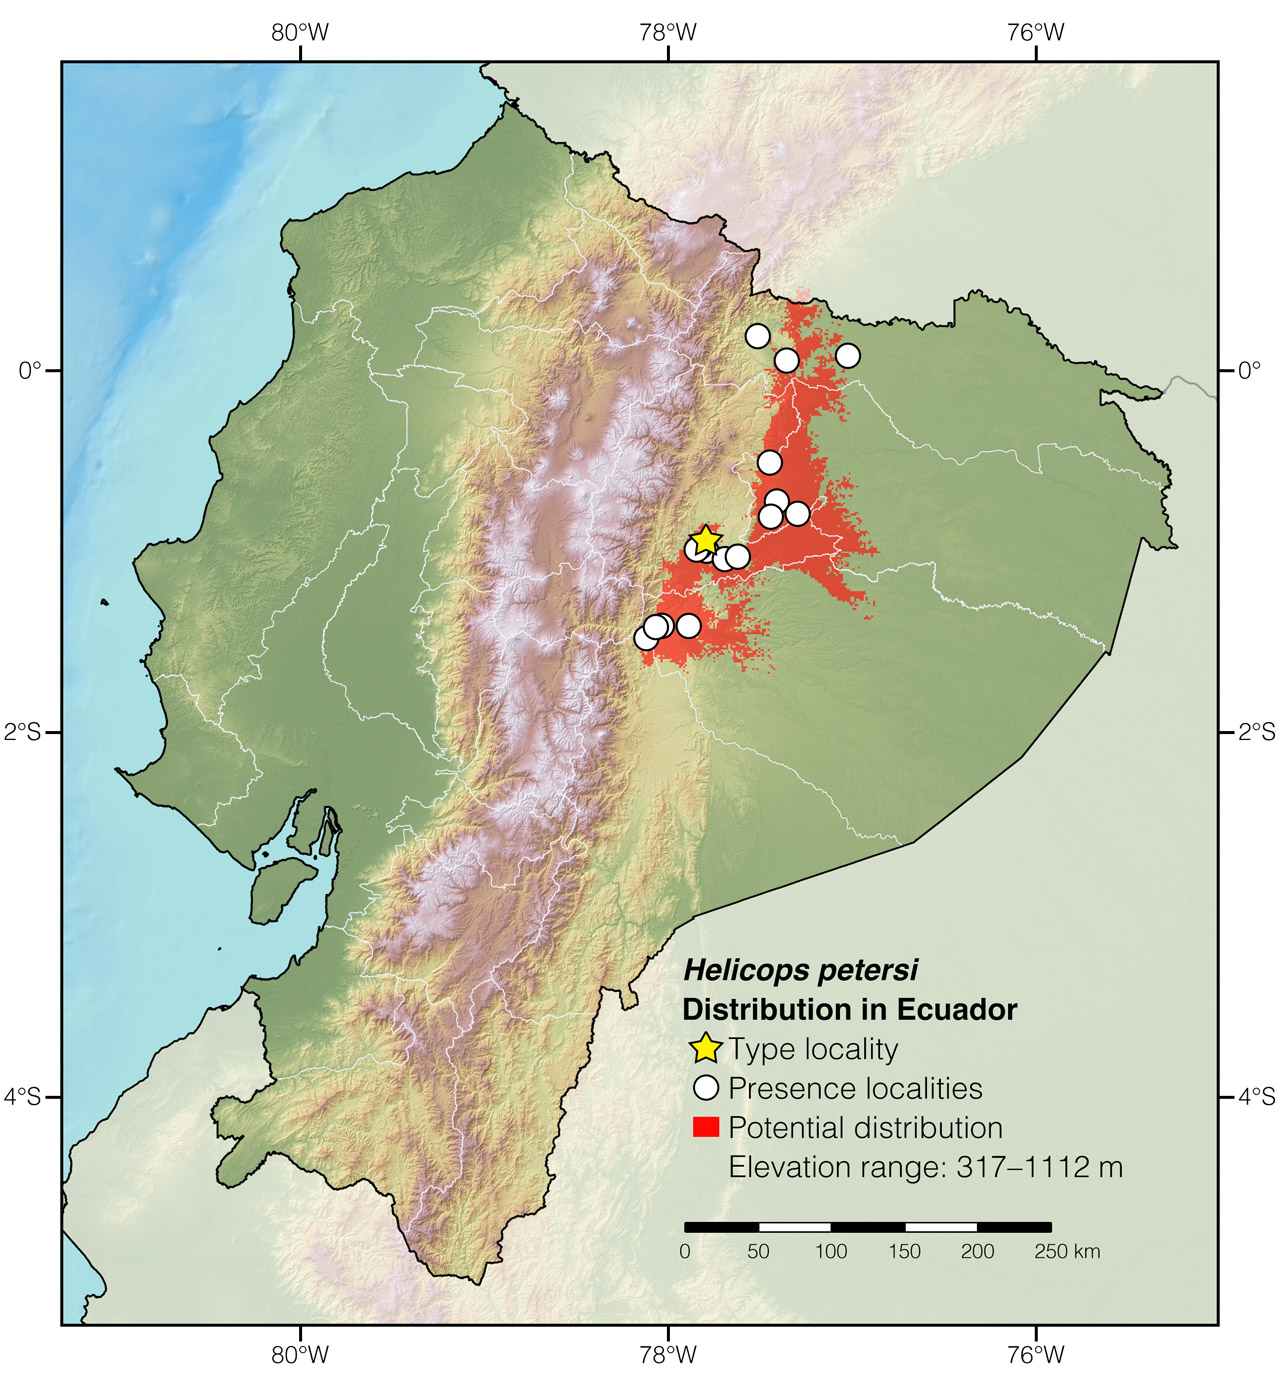 Distribution of Helicops petersi in Ecuador